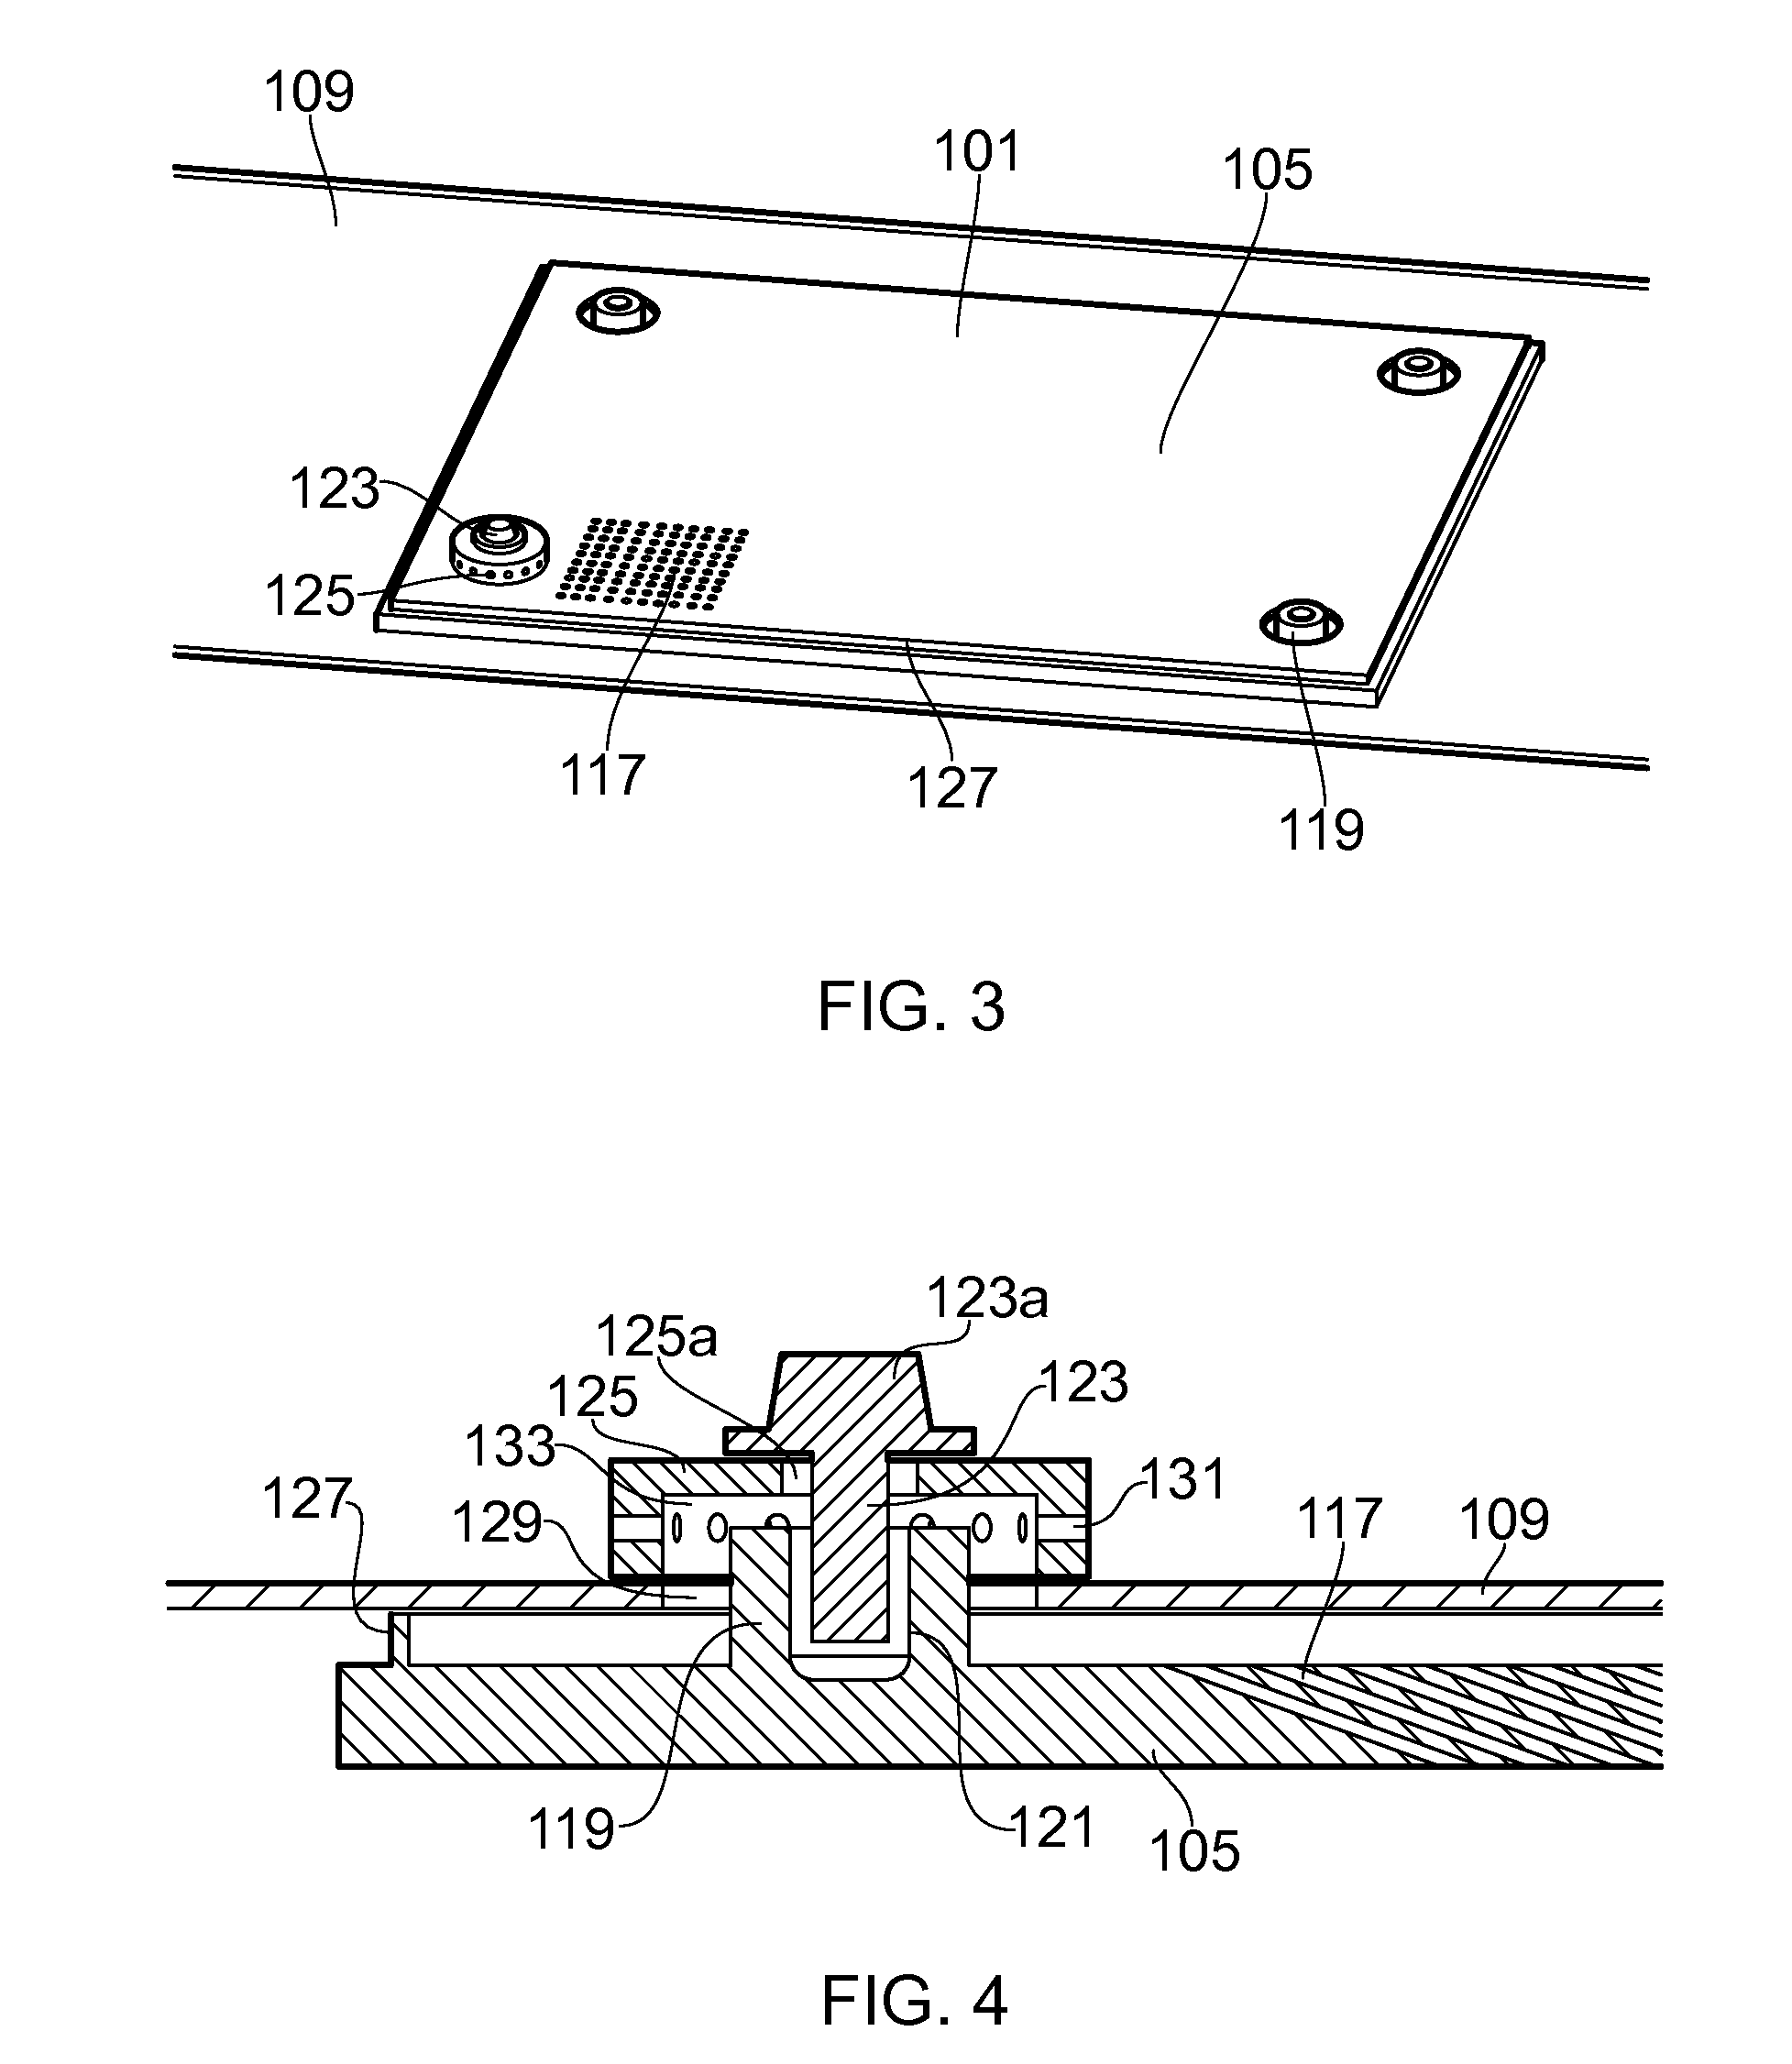 Combustor tile mounting arrangement